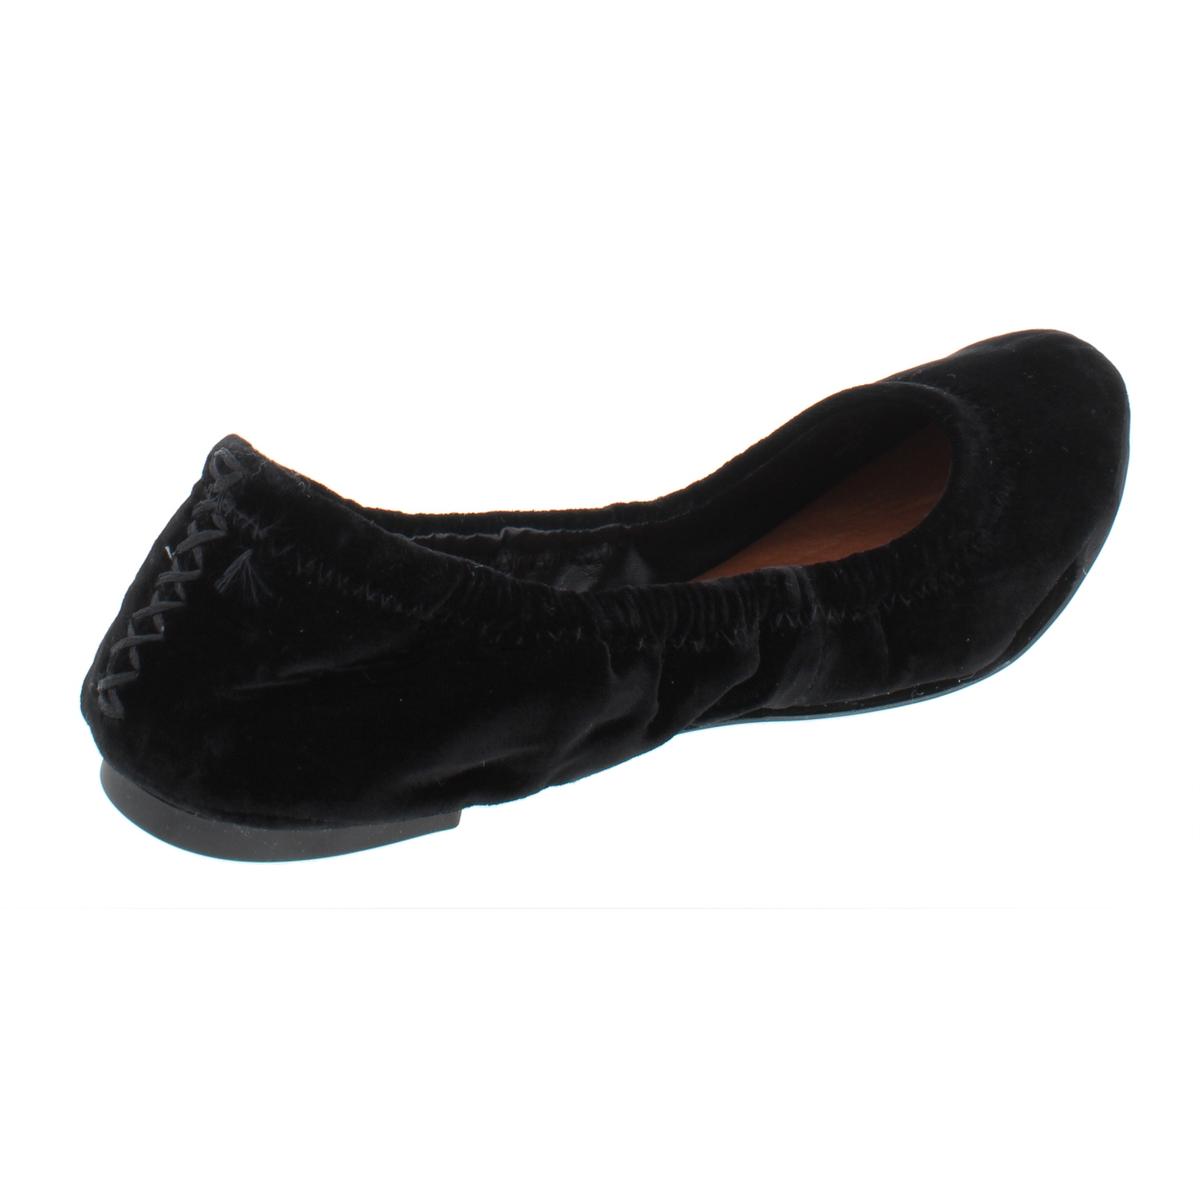 Lucky Brand Emmie Women's Slip On Round Toe Ballet Flats Shoes | eBay